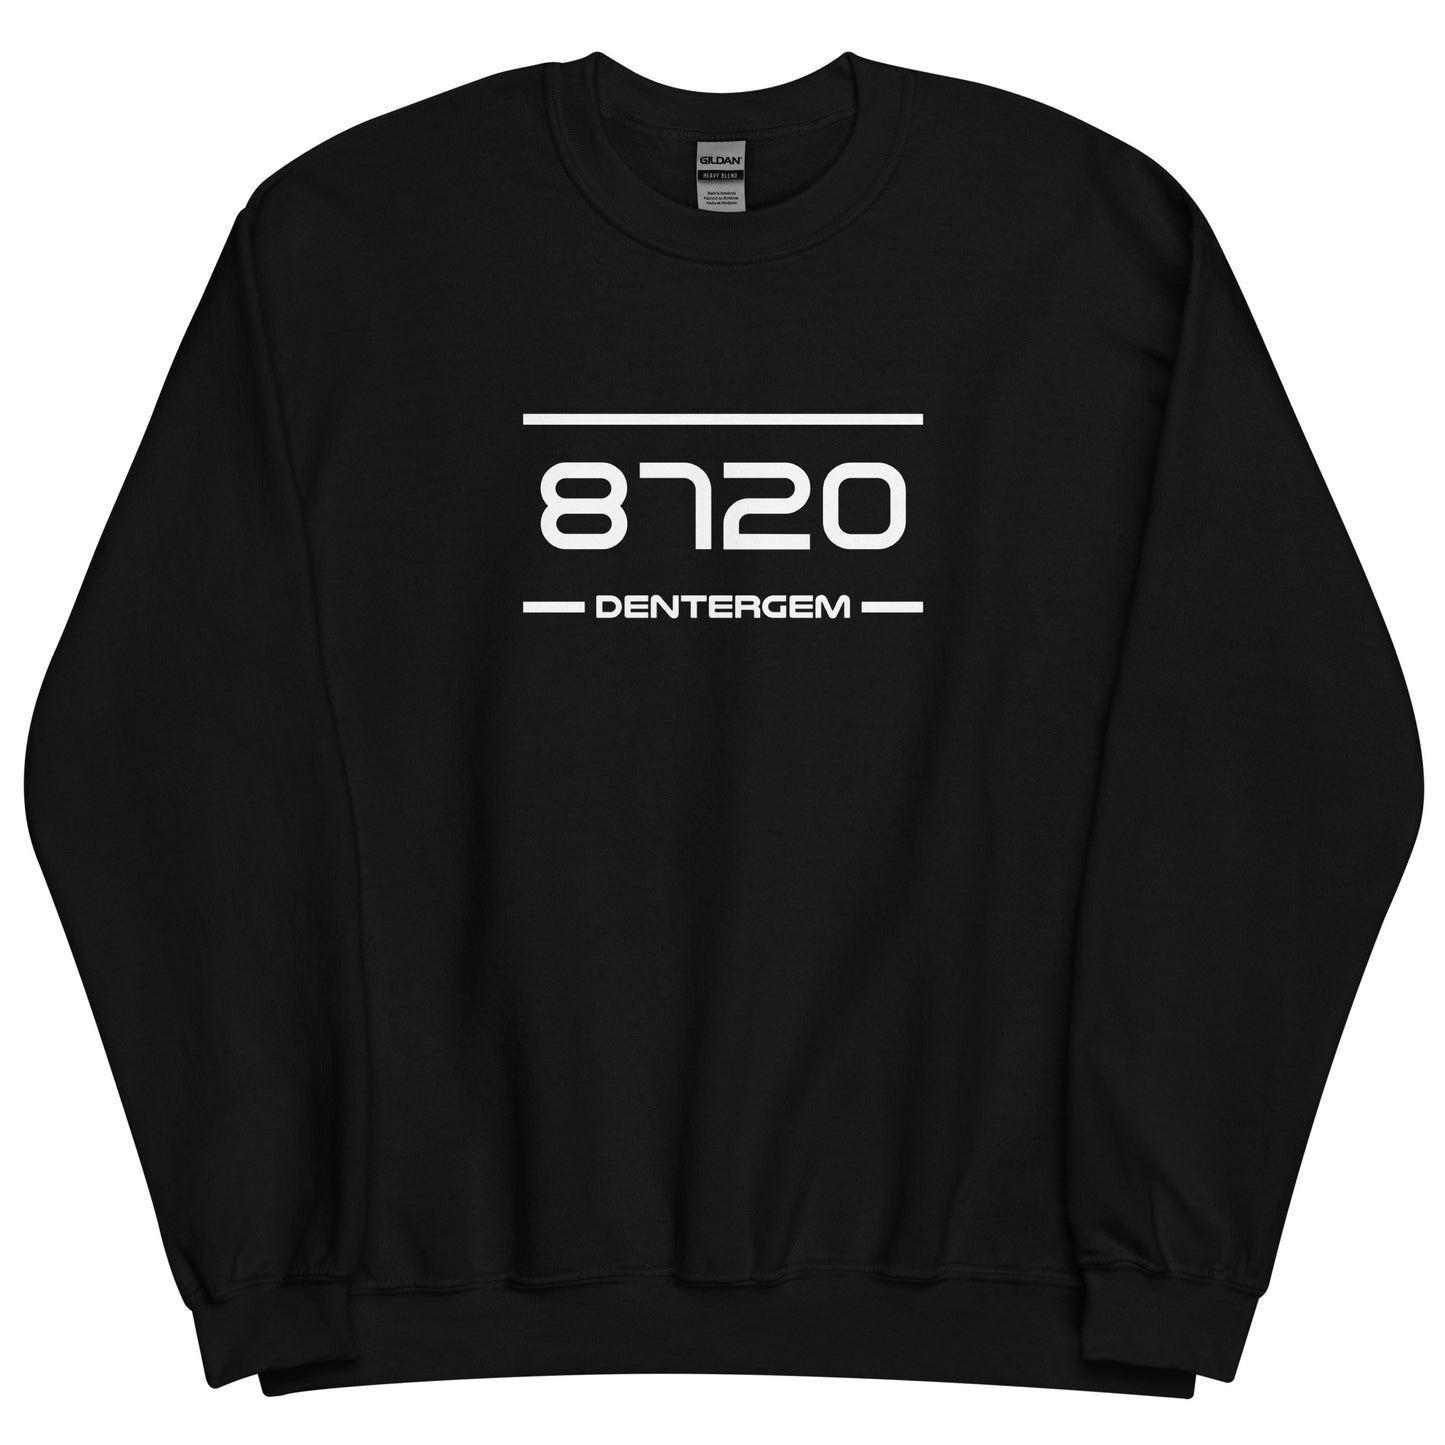 Sweater - 8720 - Dentergem (M/V)